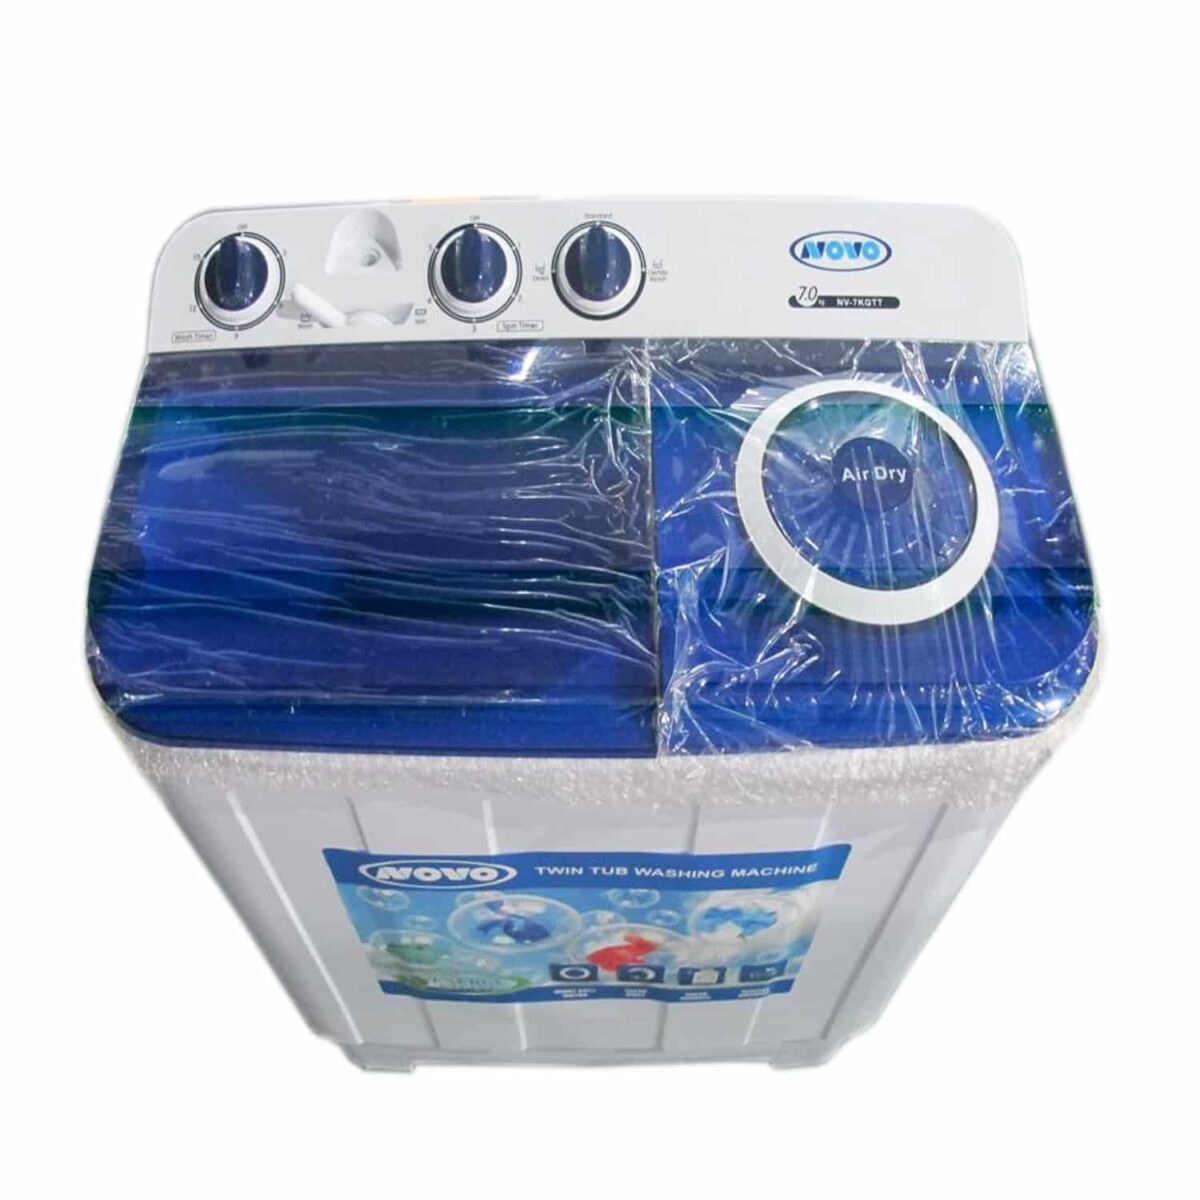 Novo 12Kg Twin Tub Semi Automatic Washing Machine NV-12KG77TT